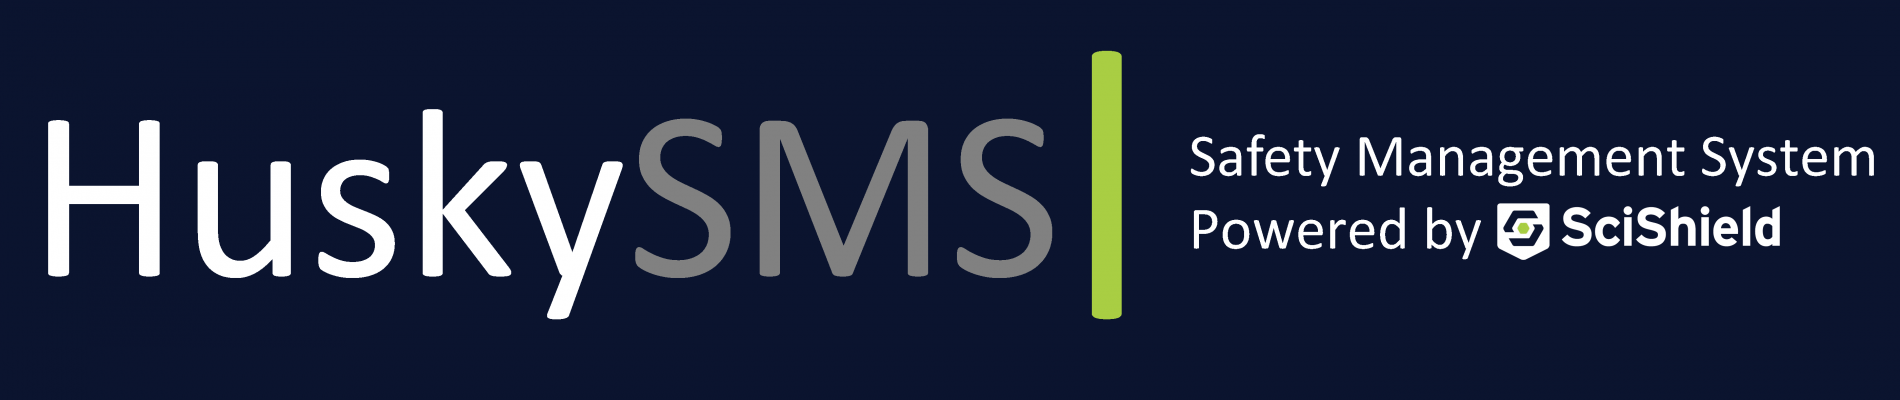 Husky SMS banner with SciShield logo